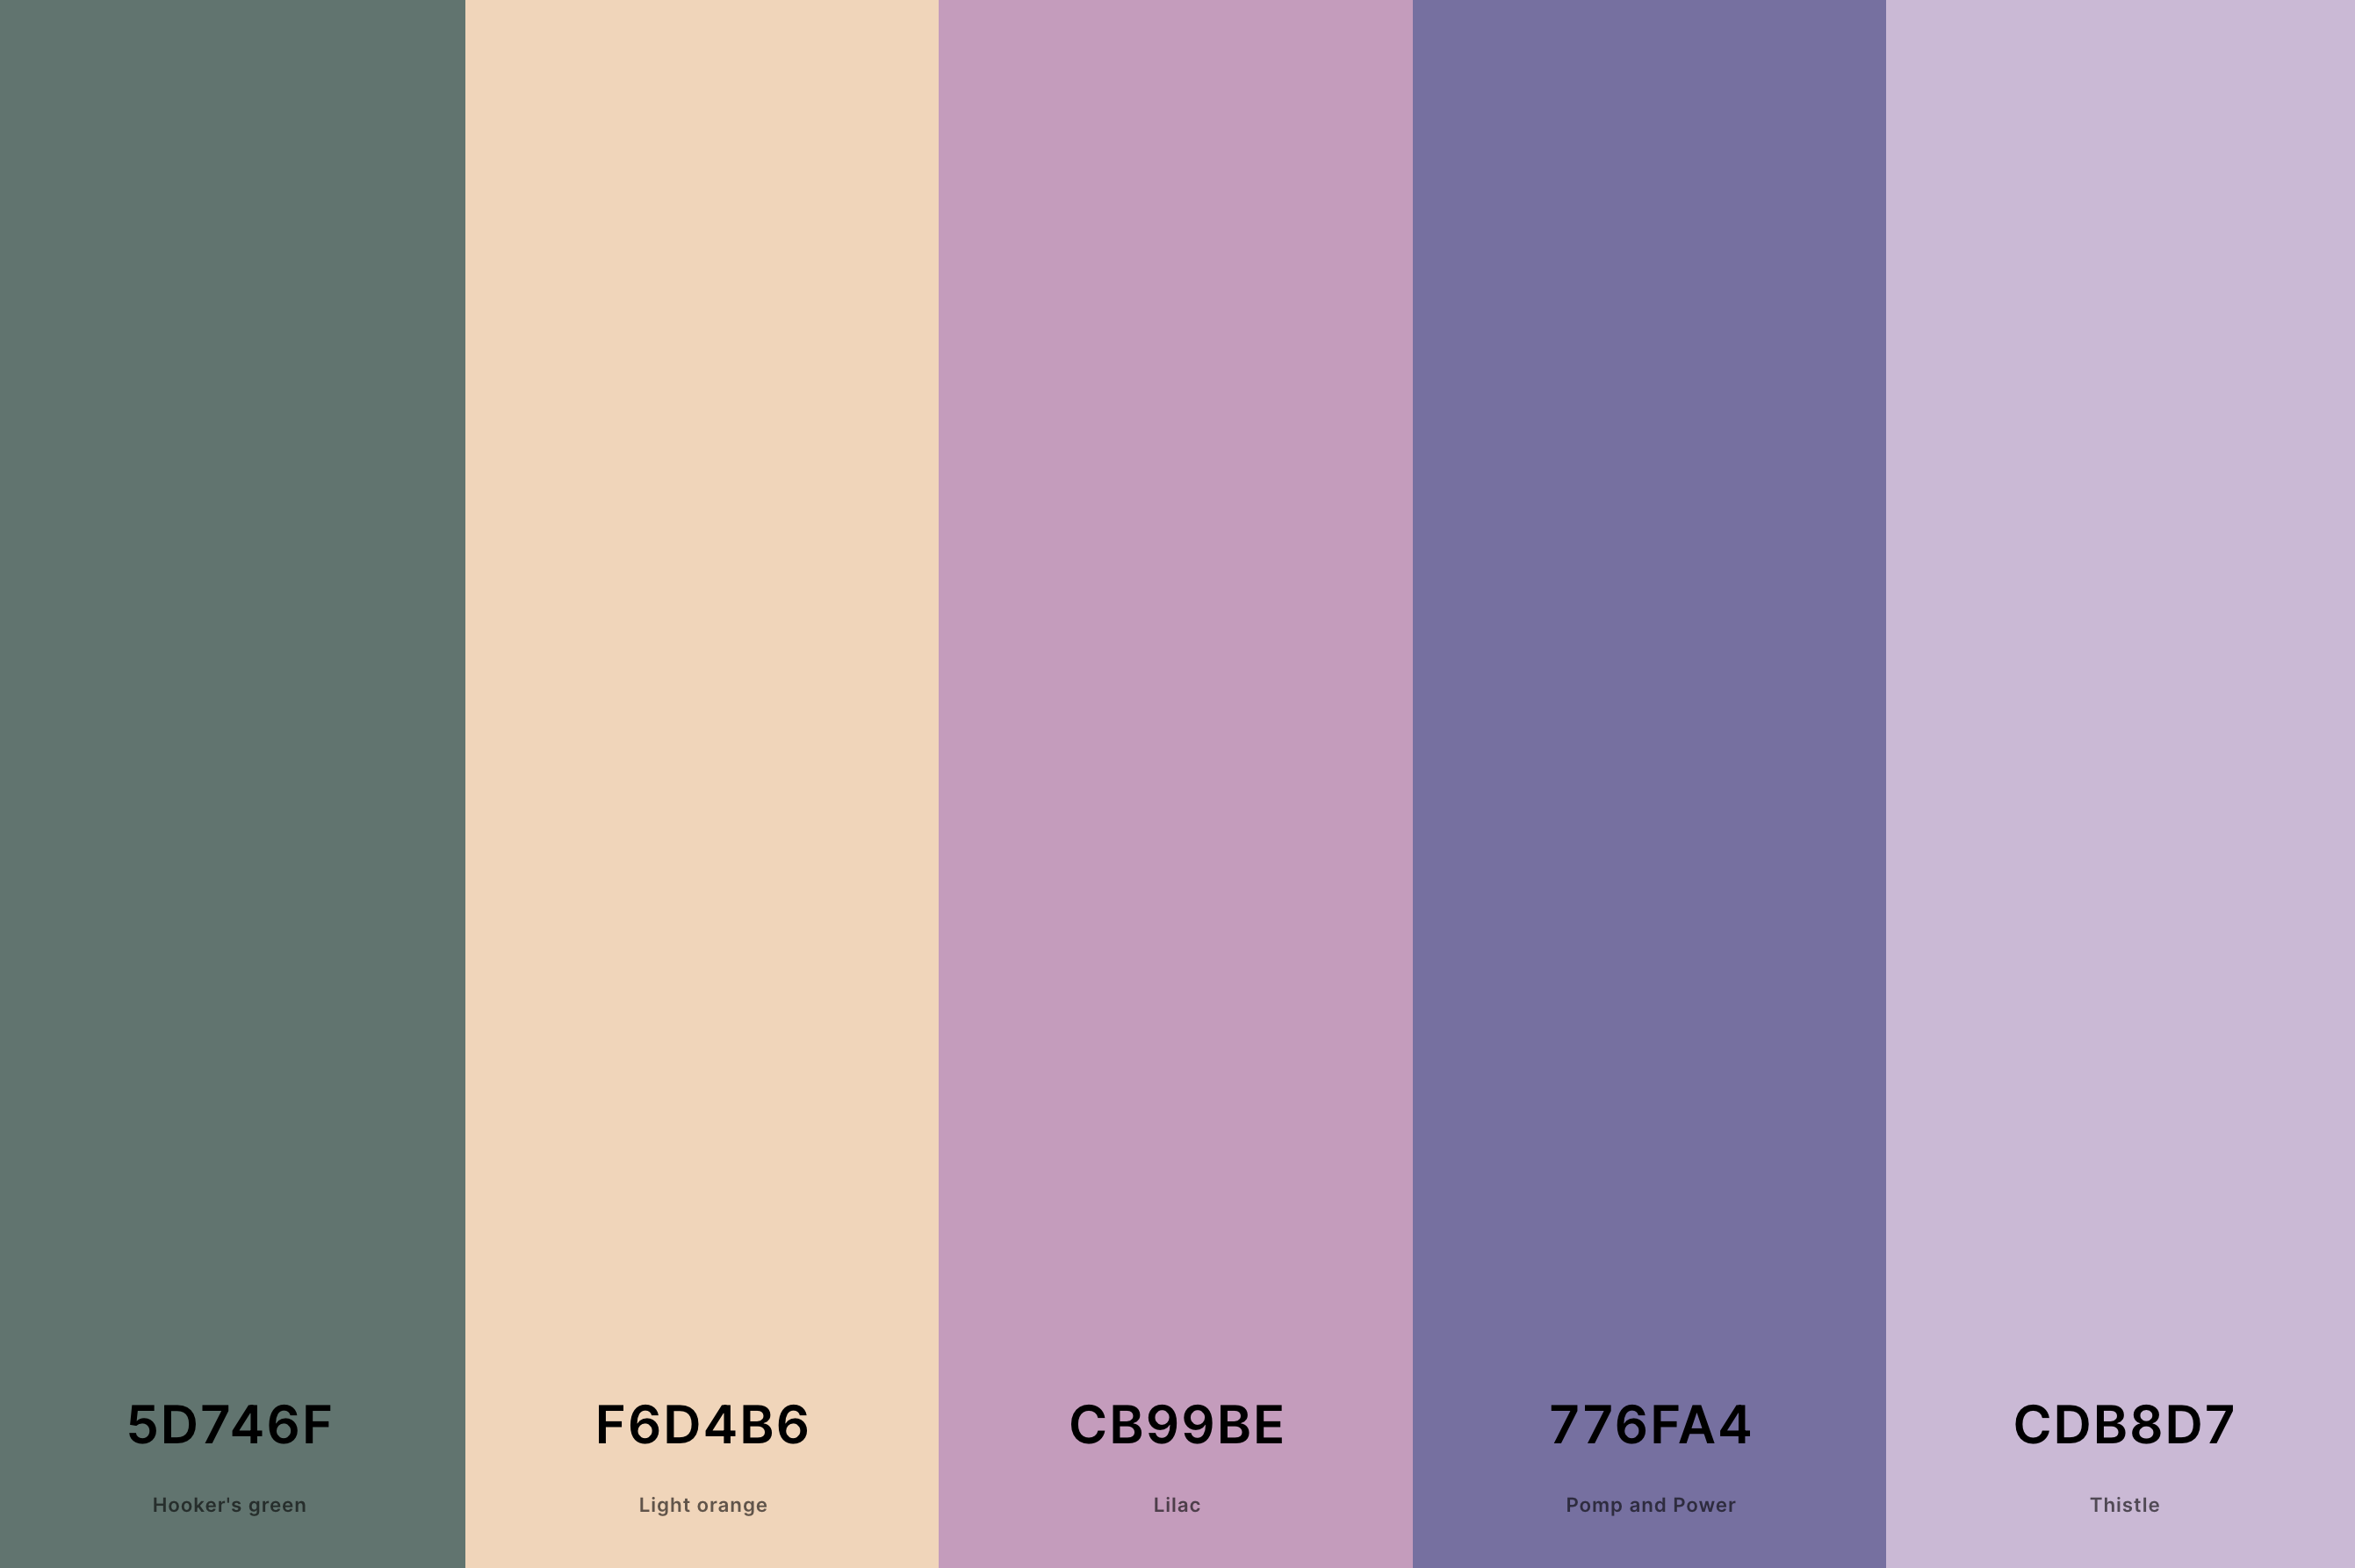 2. Lavender Wedding Color Palette Color Palette with Hooker'S Green (Hex #5D746F) + Light Orange (Hex #F6D4B6) + Lilac (Hex #CB99BE) + Pomp And Power (Hex #776FA4) + Thistle (Hex #CDB8D7) Color Palette with Hex Codes